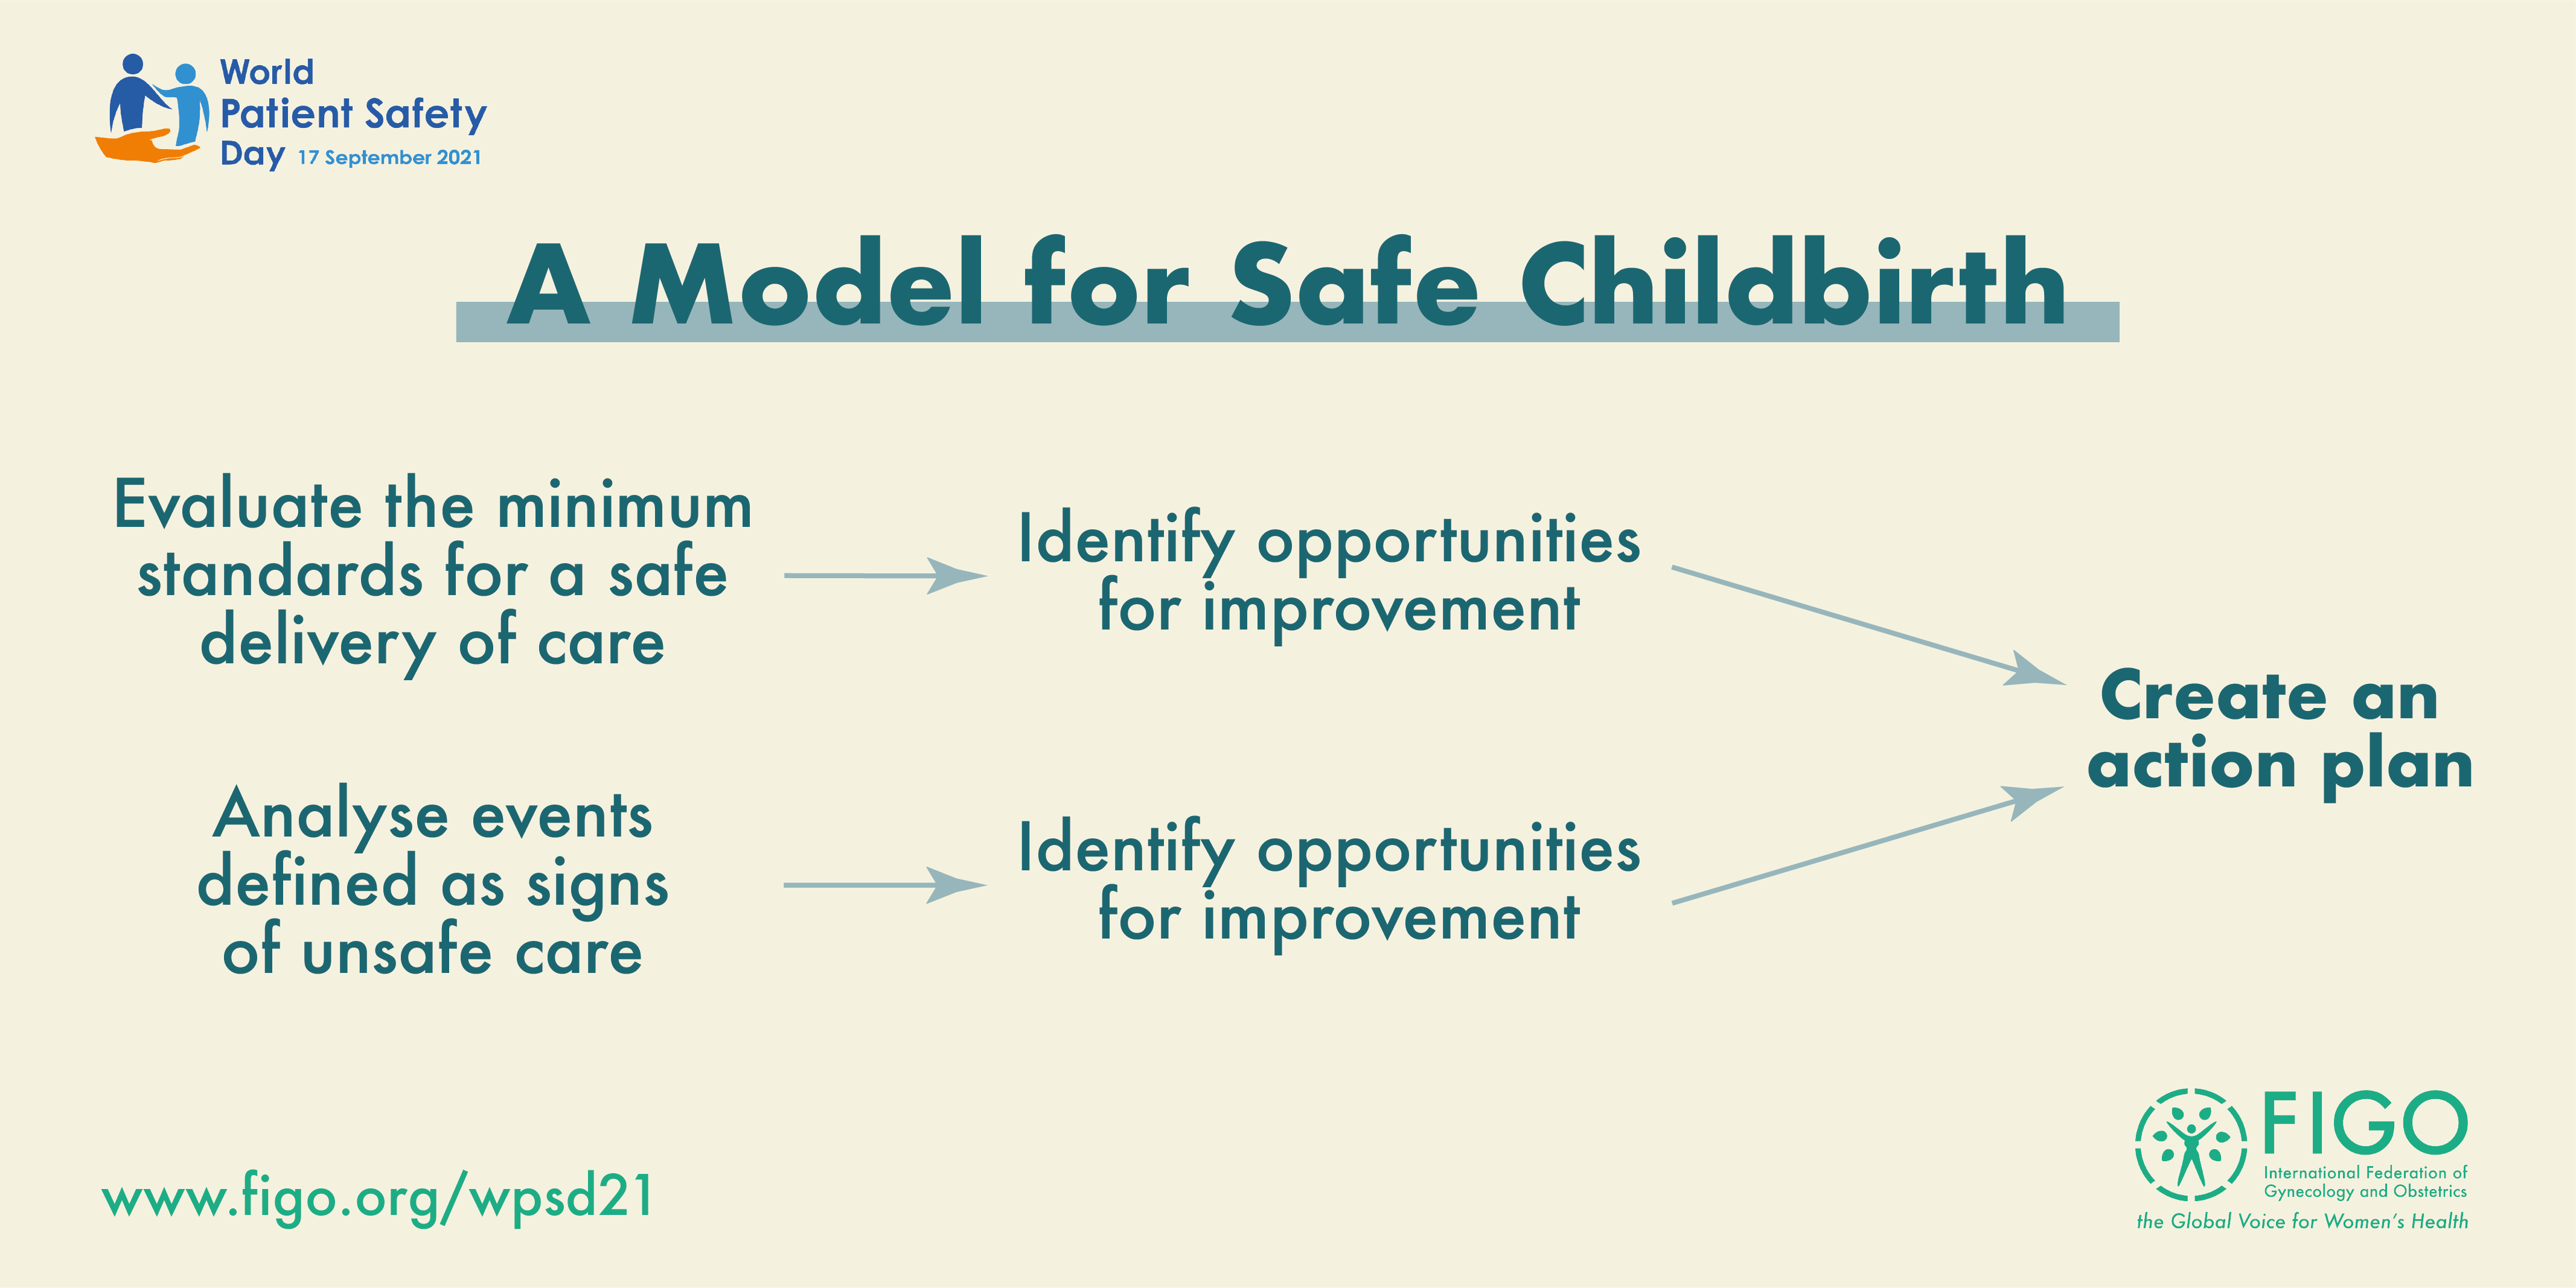 simple visual illustrating the FIGO model for safe childbirth